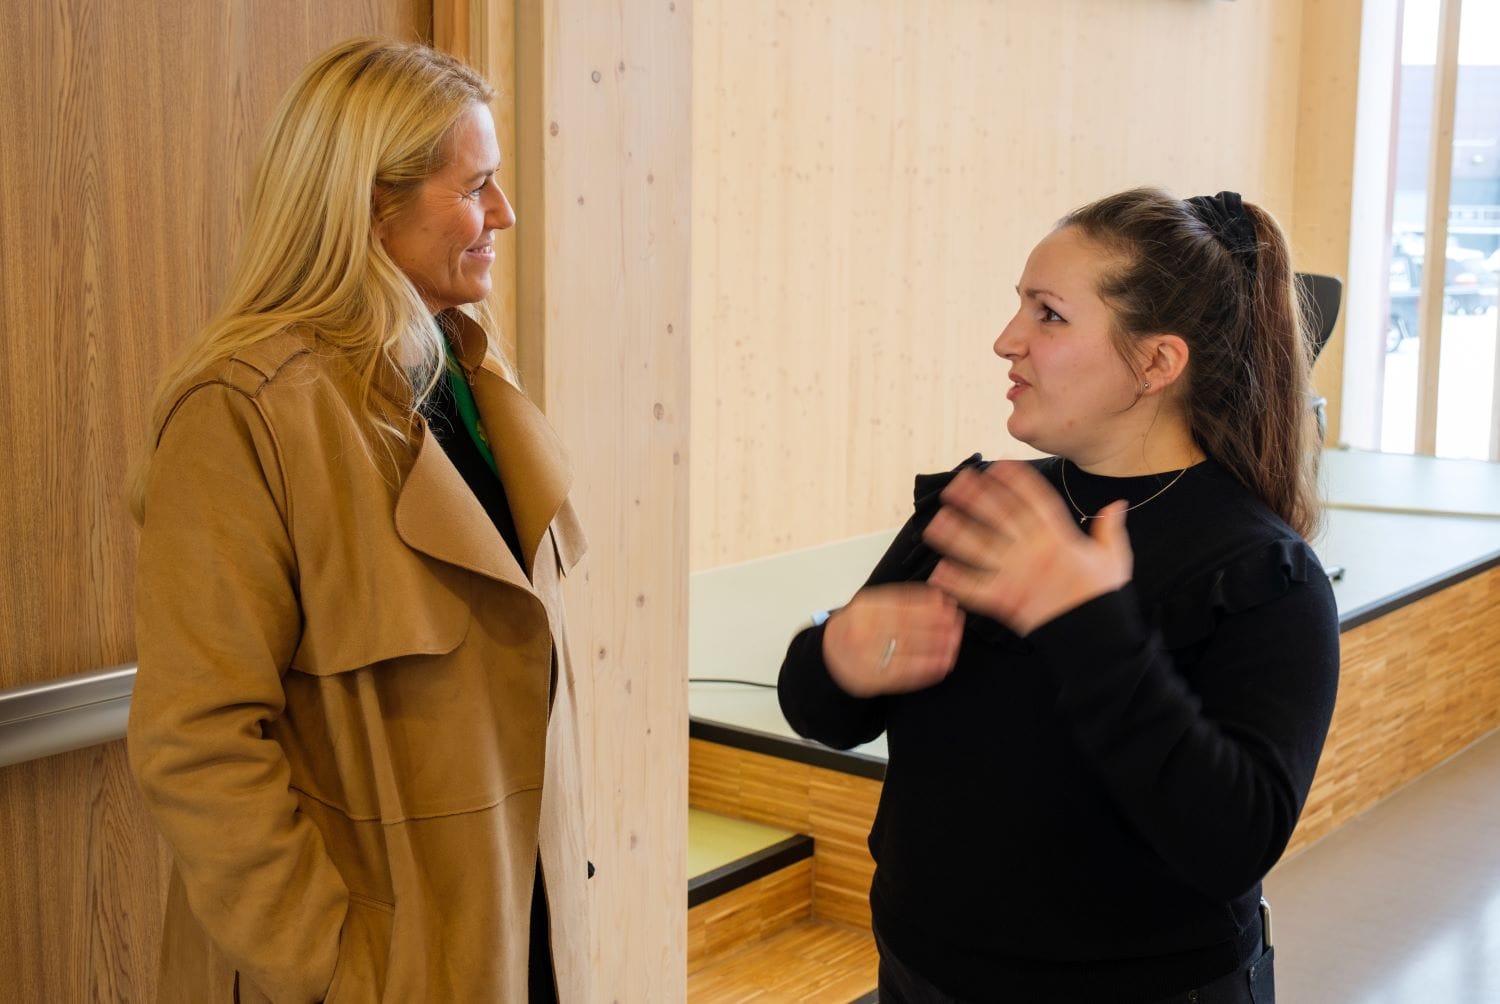 anna i sort genser prater med Monica Myrvold Berg som har på seg en beige kåpe